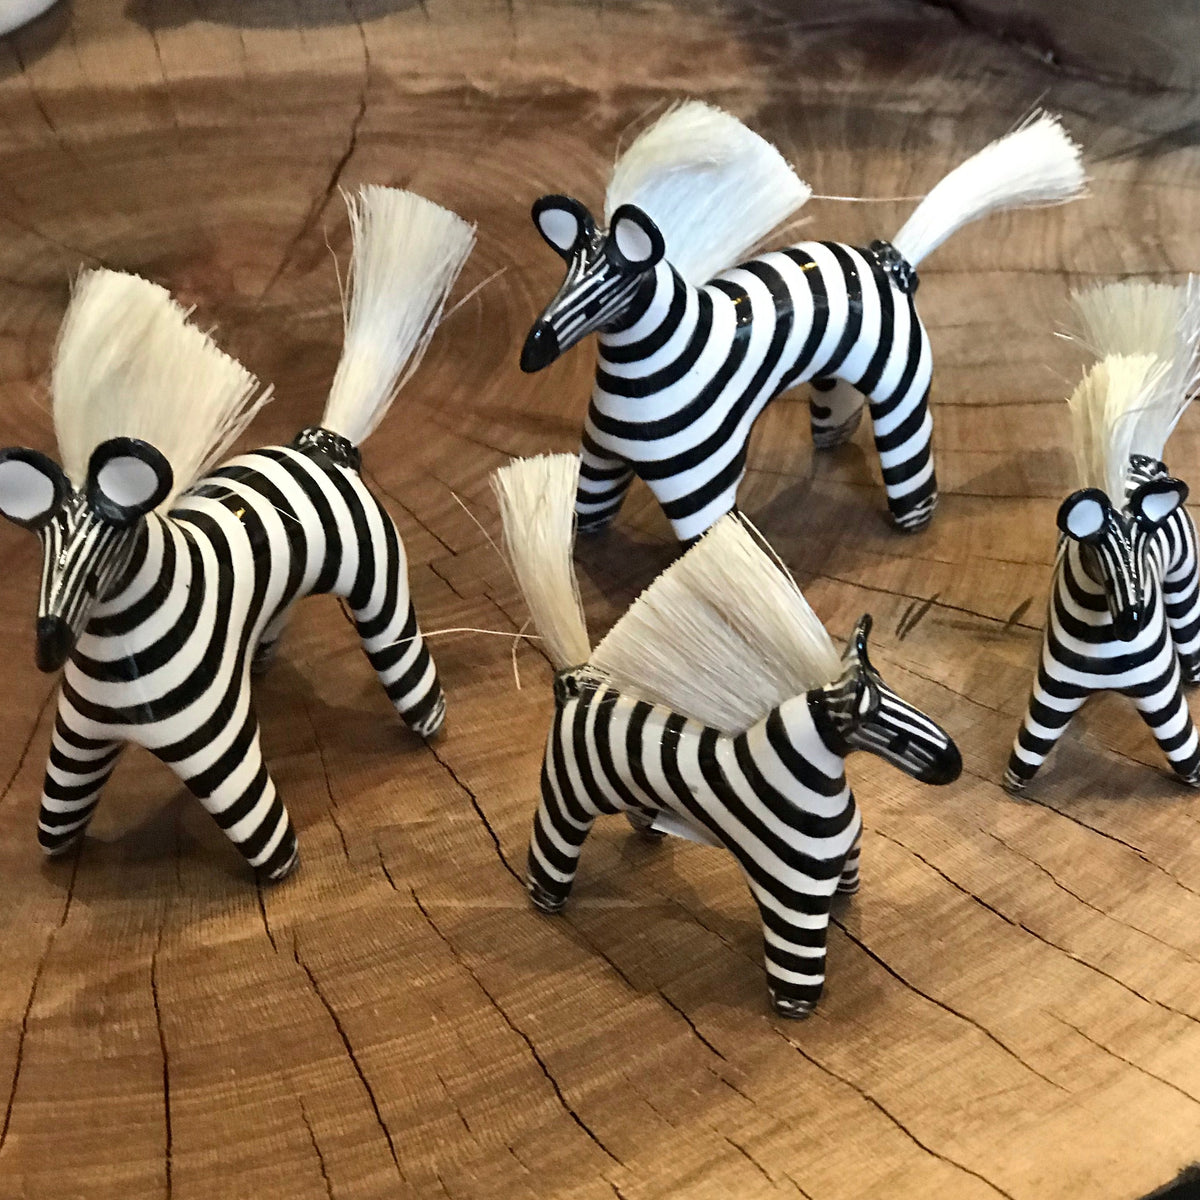 Hand made ceramic zebra from South Africa.